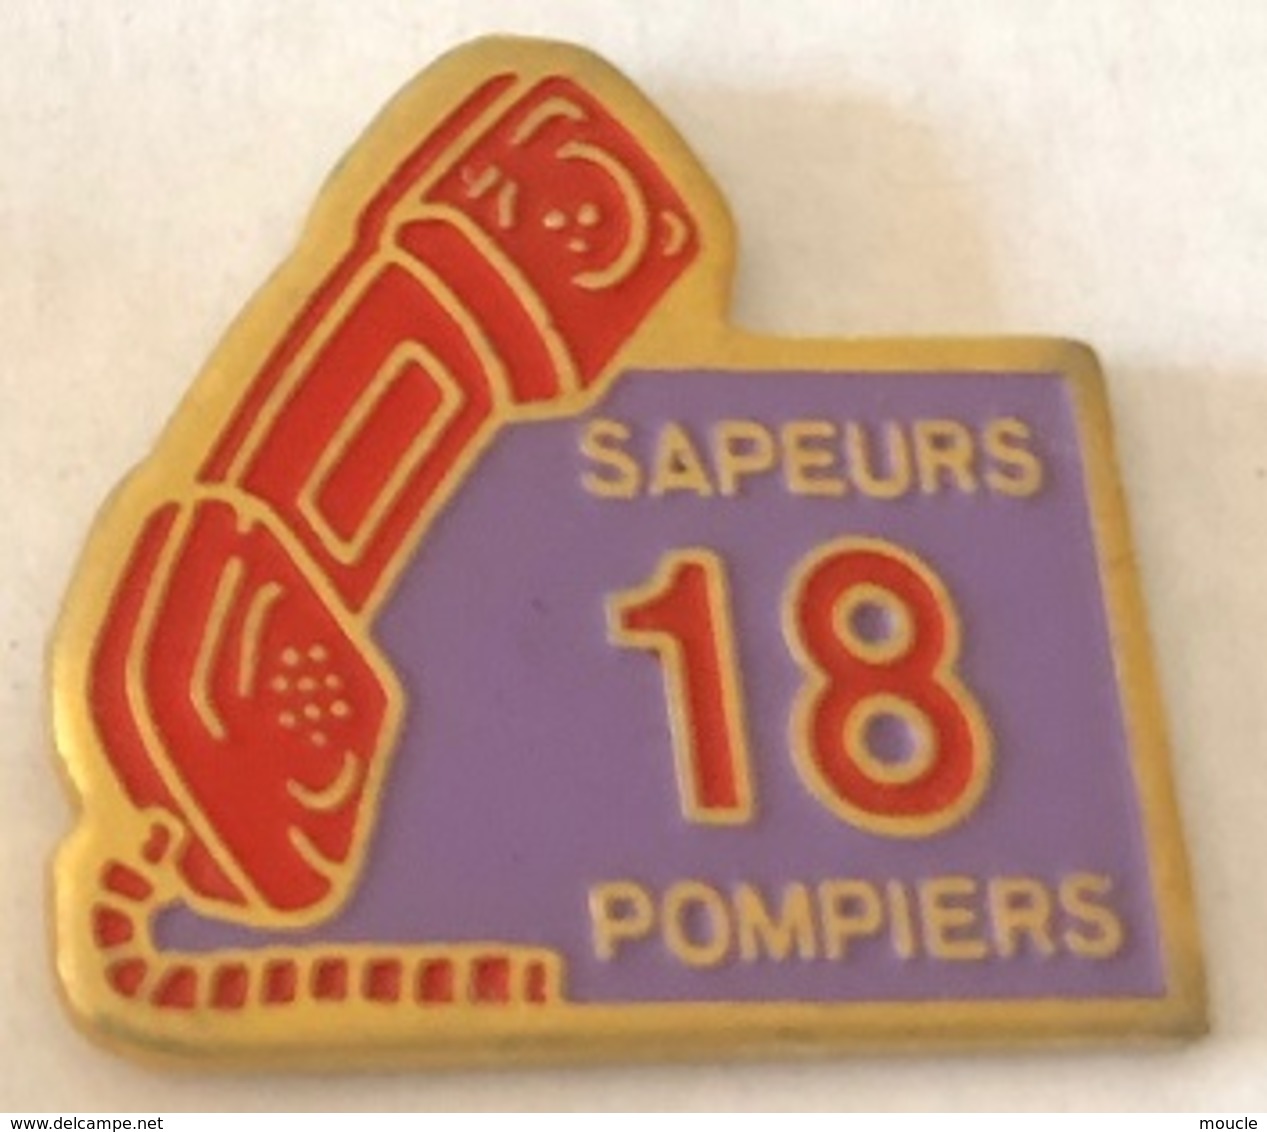 SAPEURS POMPIERS -18 - TELEPHONE - FRANCE - TELEFONO POMPIERE - PHONE FIREFIGHTER - TELEFON  FEUERWEHRMANN - (25) - Pompiers